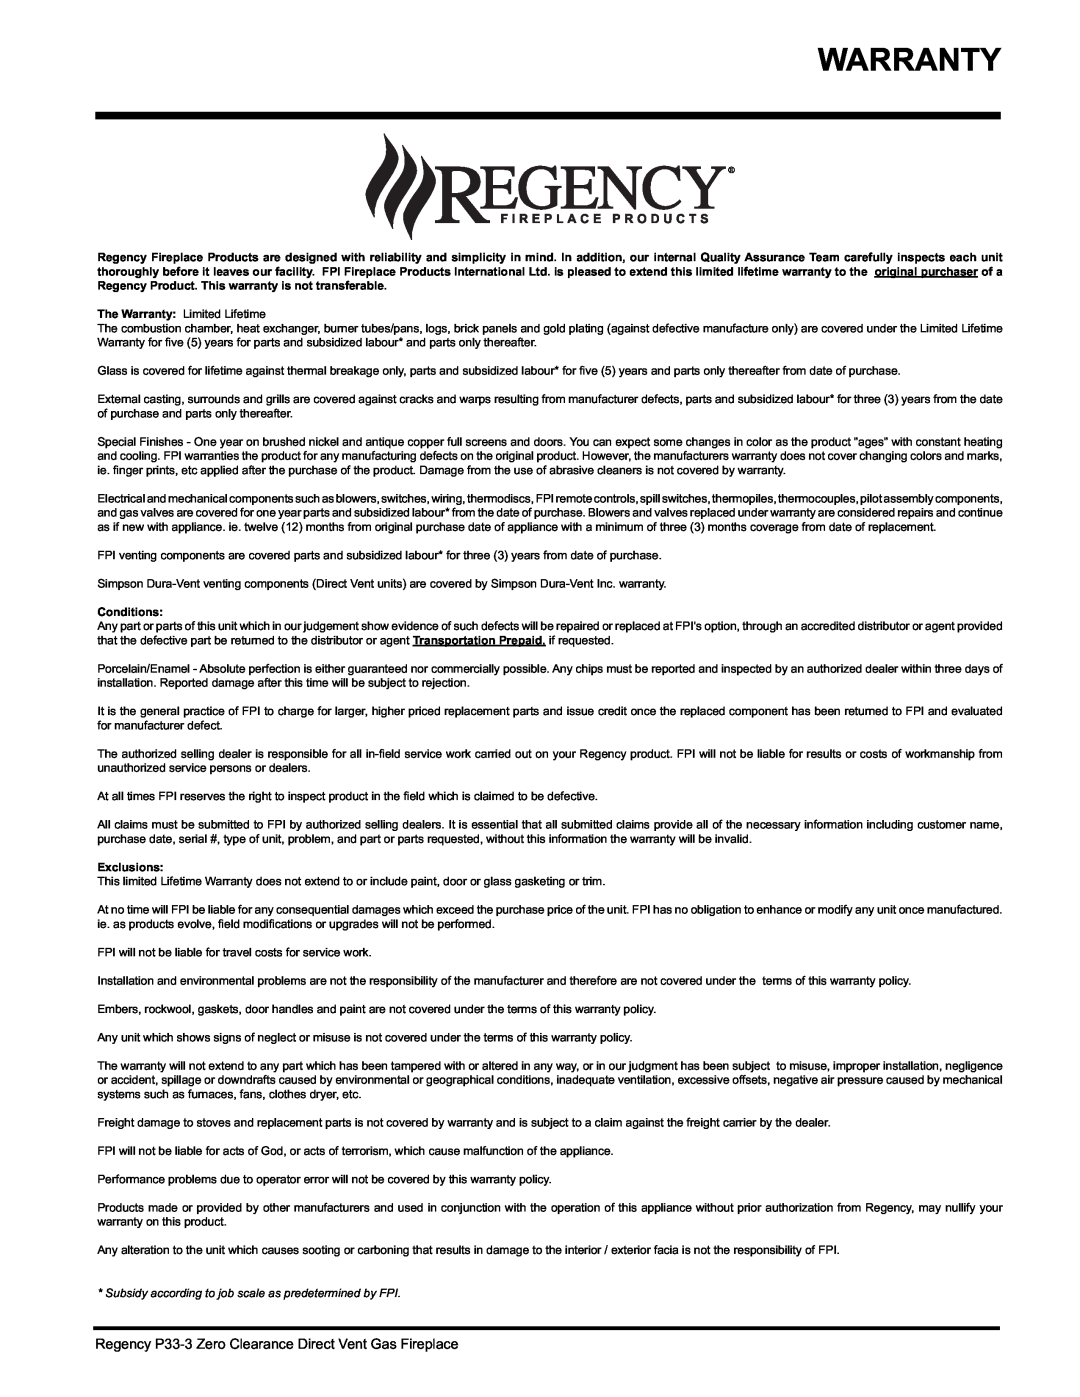 Regency P33-NG3, P33-LP3 installation manual Warranty, Conditions, Exclusions 